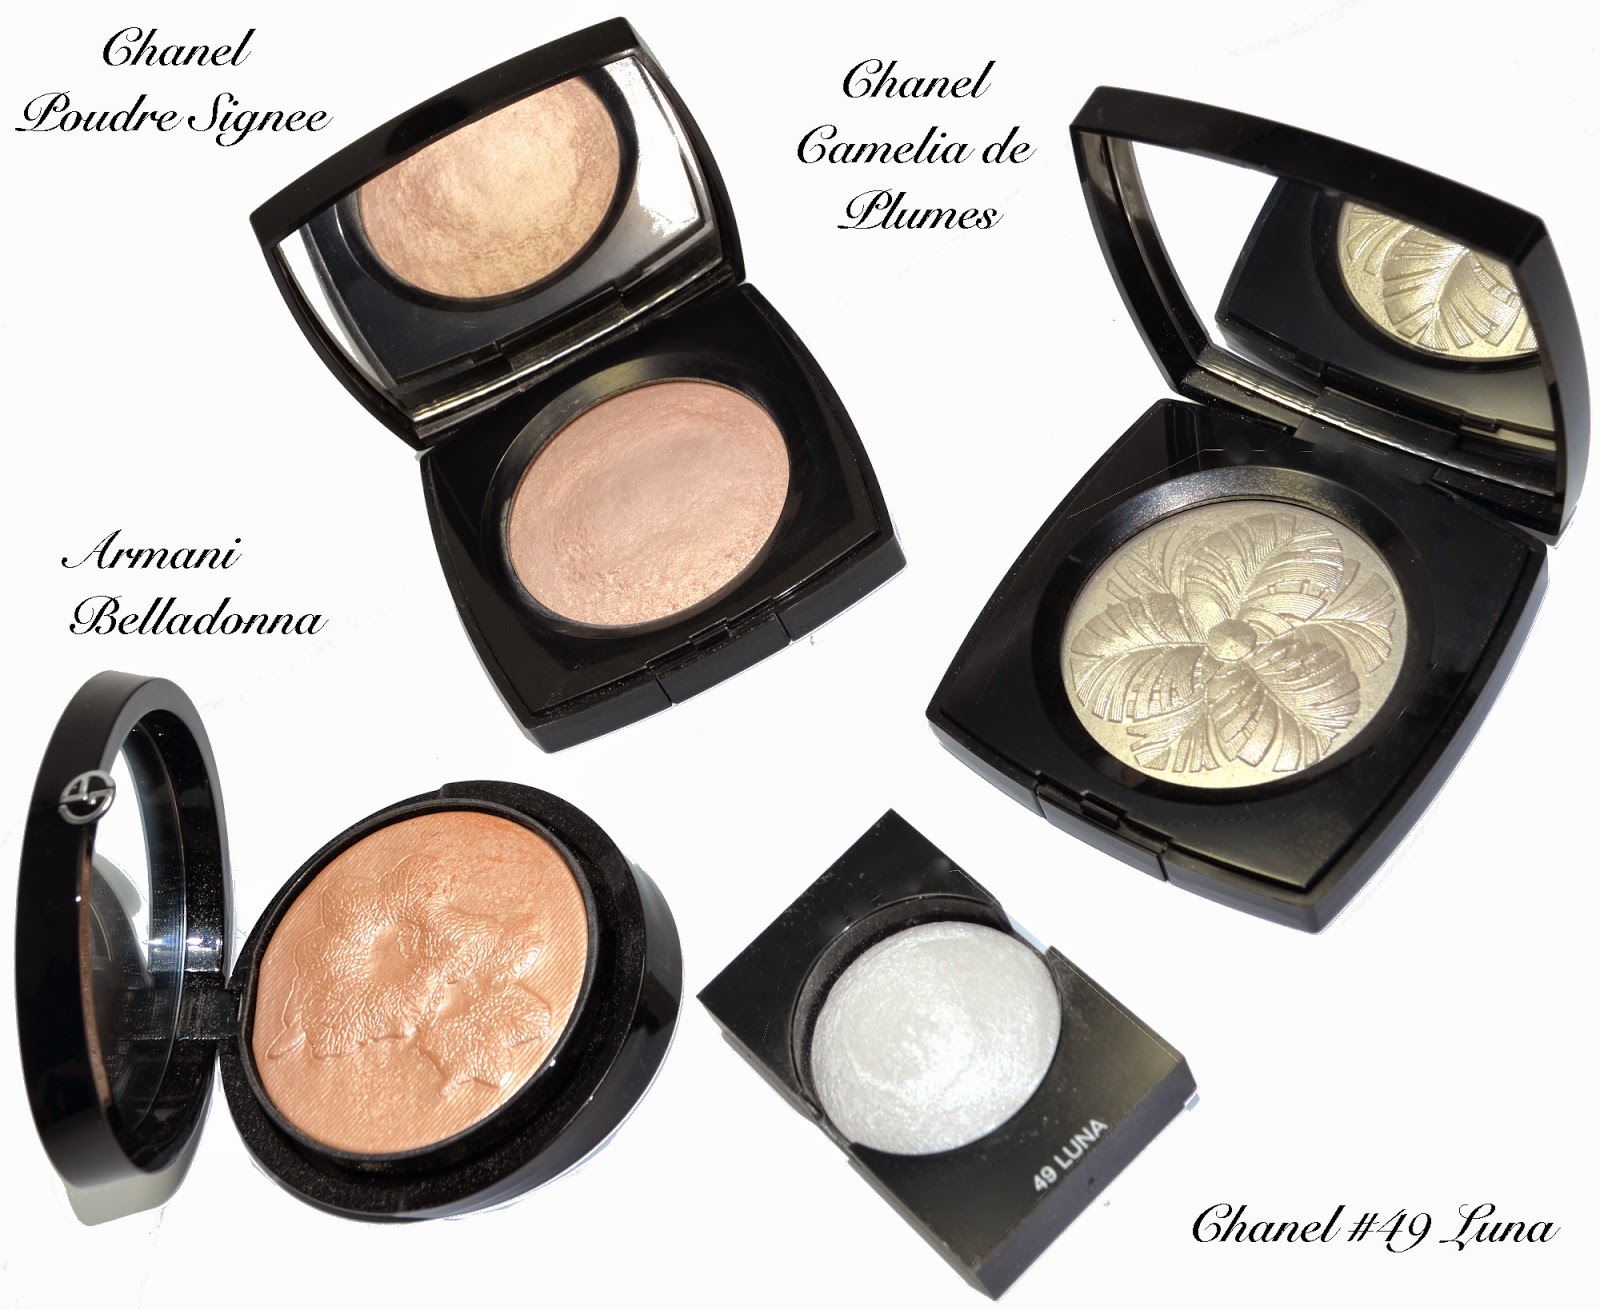 Chanel Camélia de Plumes Highlighting Powder for Plumes Précieuses Holiday  2014 Collection, Swatch, Review, Comparison & FOTD | Color Me Loud